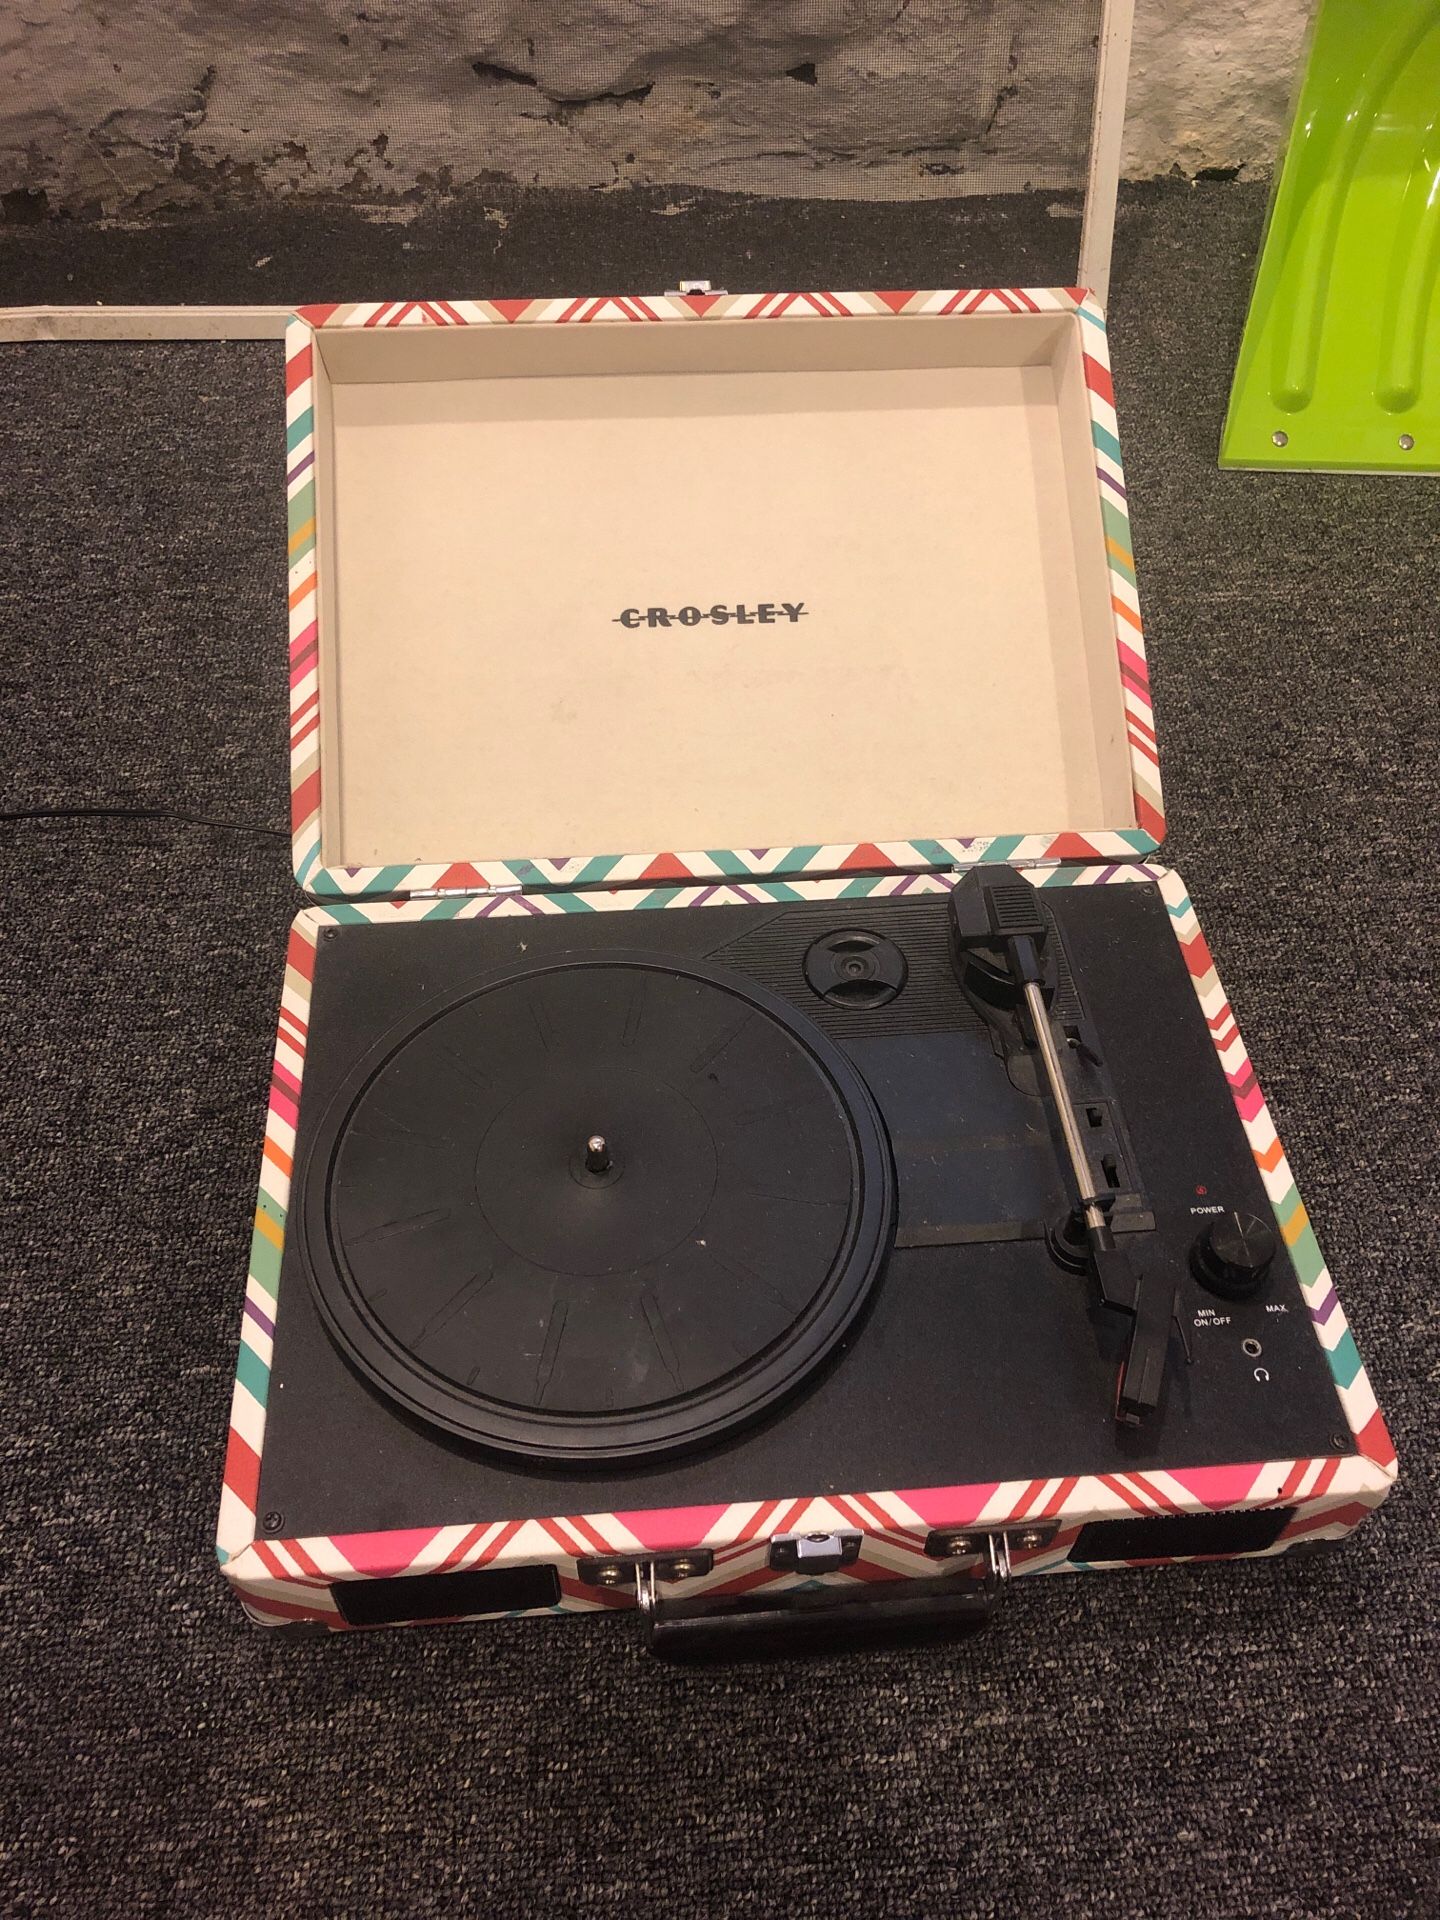 Crosley Cruiser Portable Turntable w/ Built in Speaker (Record player)